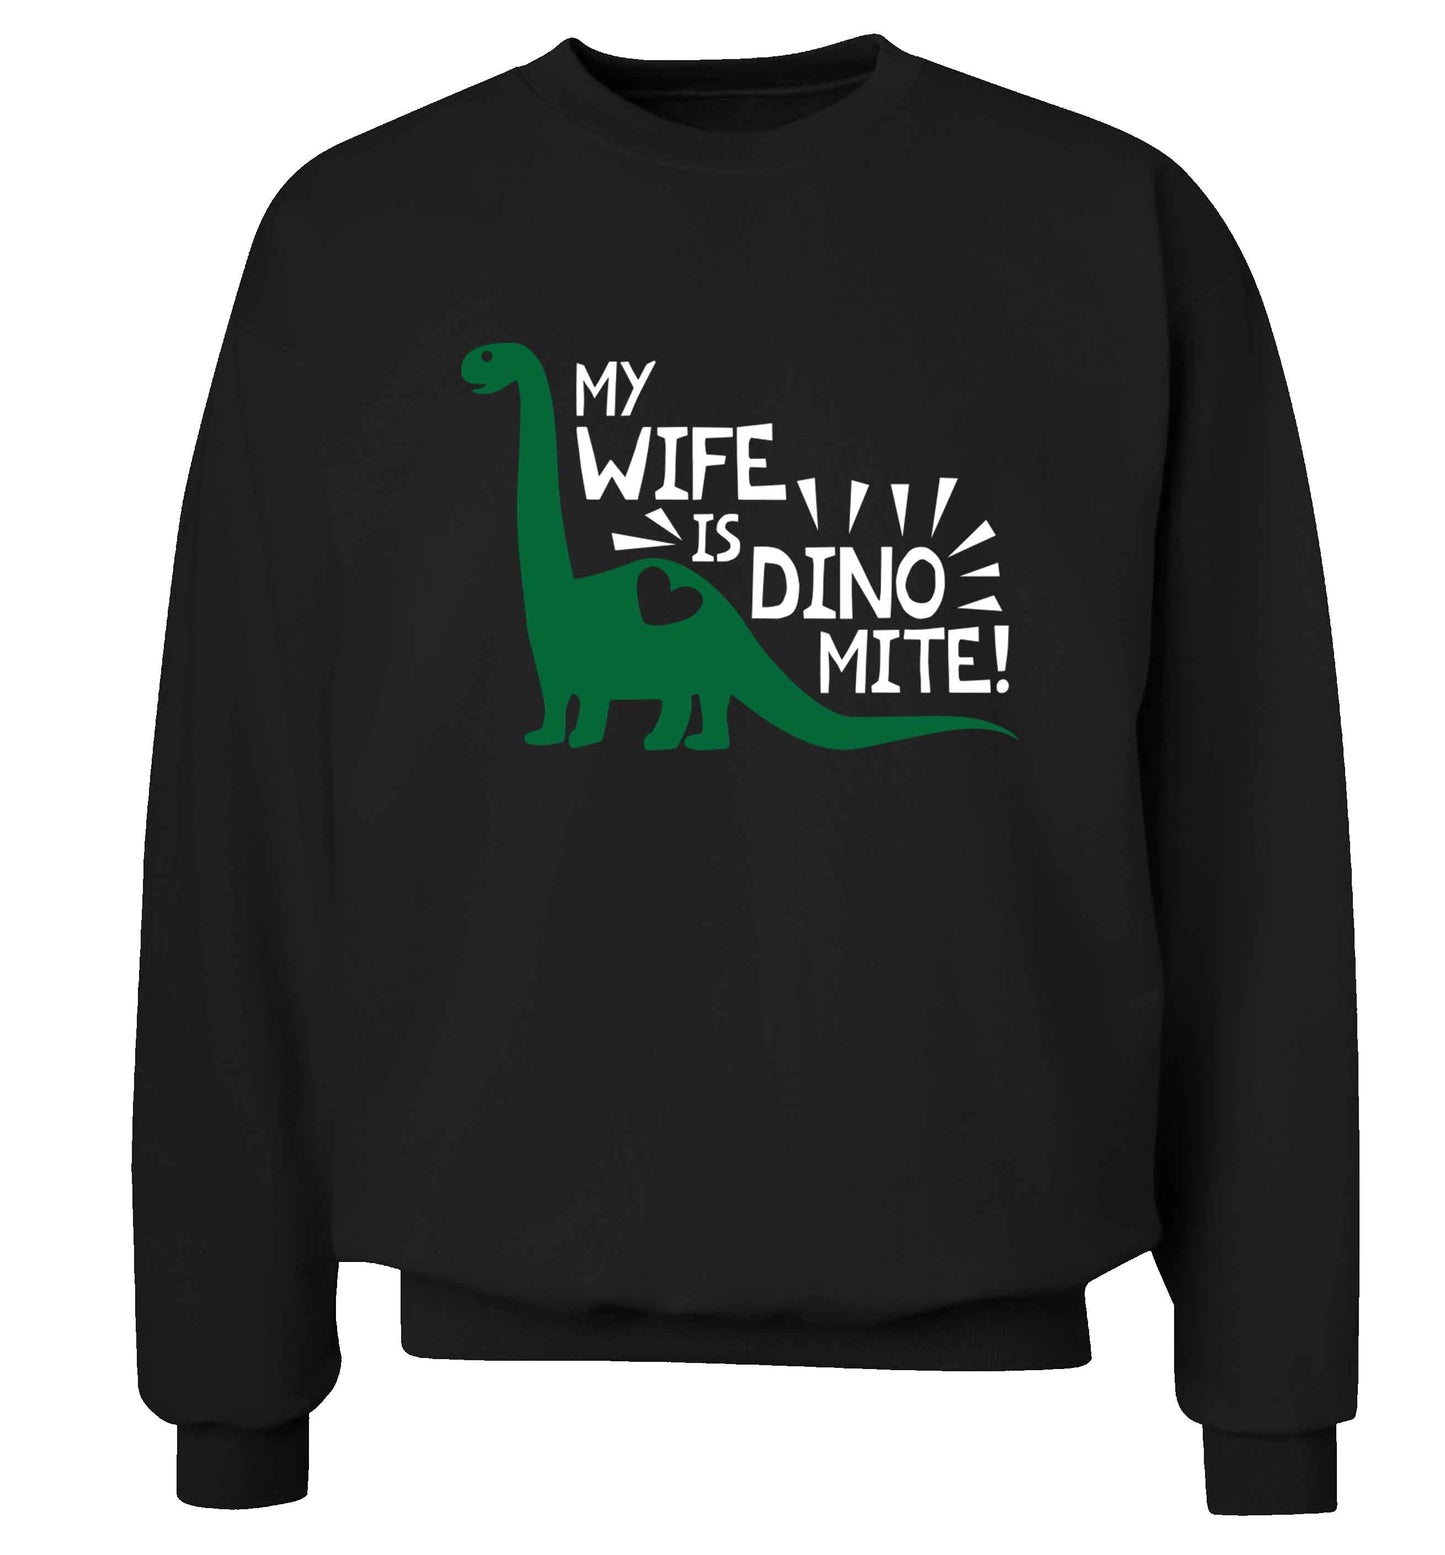 My wife is dinomite! Adult's unisex black Sweater 2XL